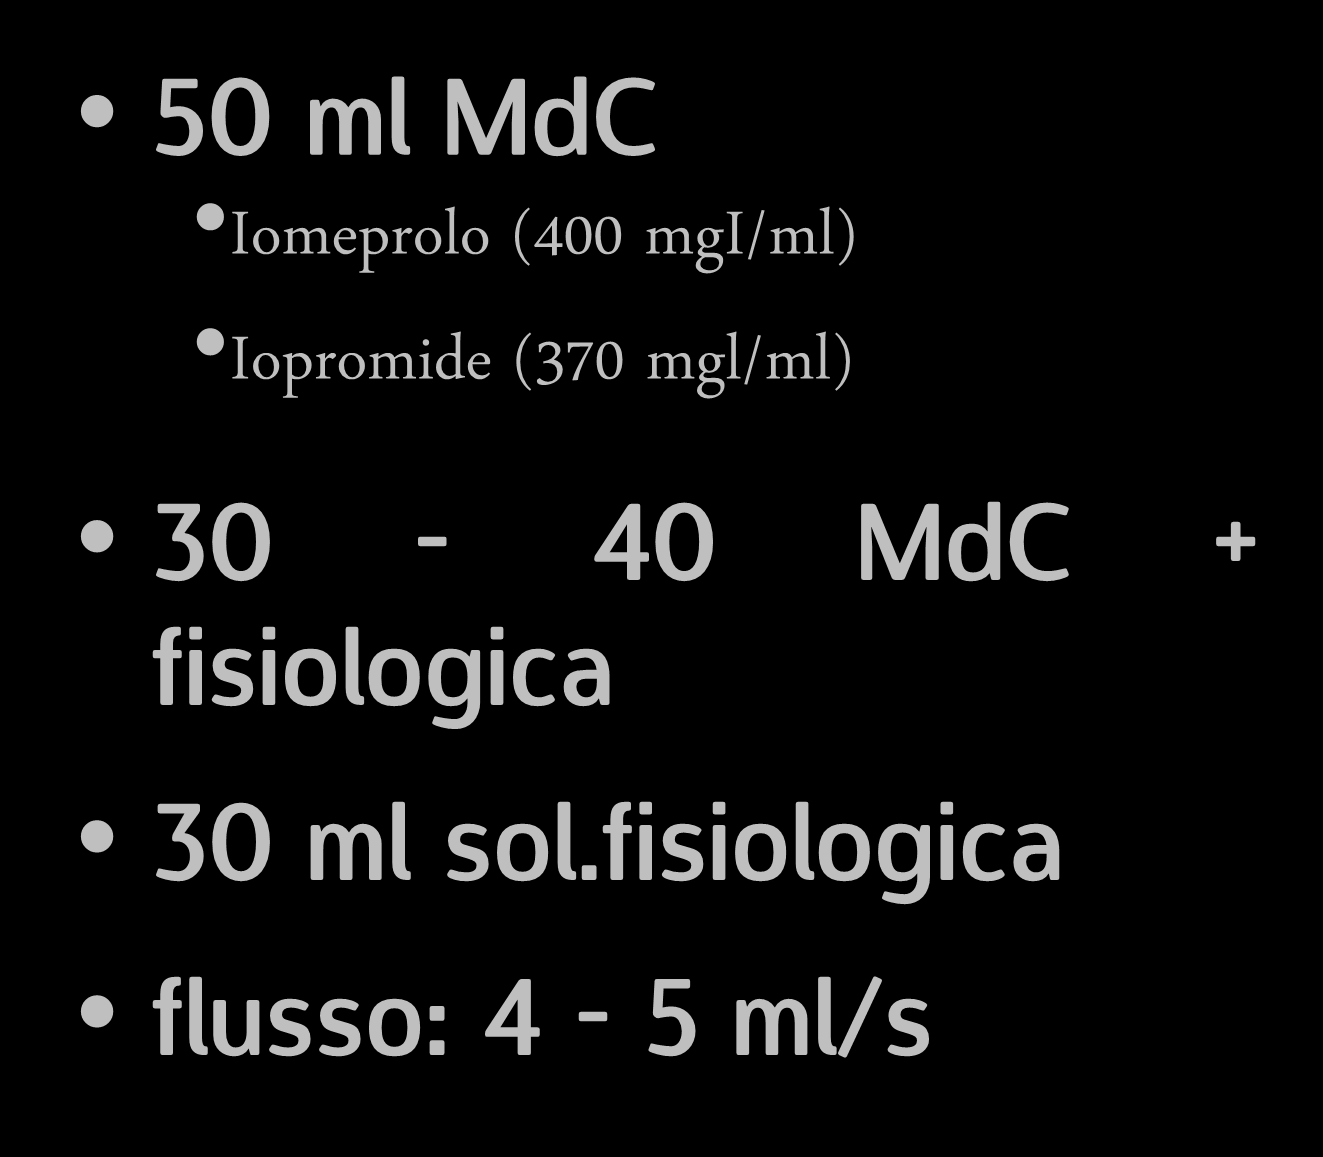 sol.fisiologica flusso: 4-5 ml/s